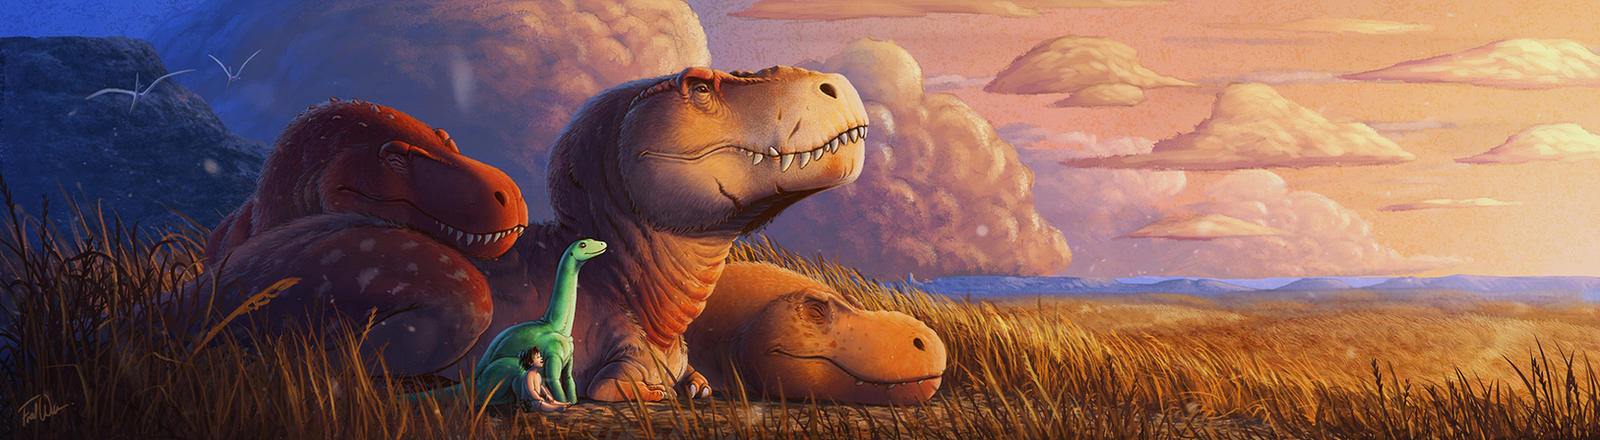 Dinosaur Sunset - The Good Dinosaur Fan Art